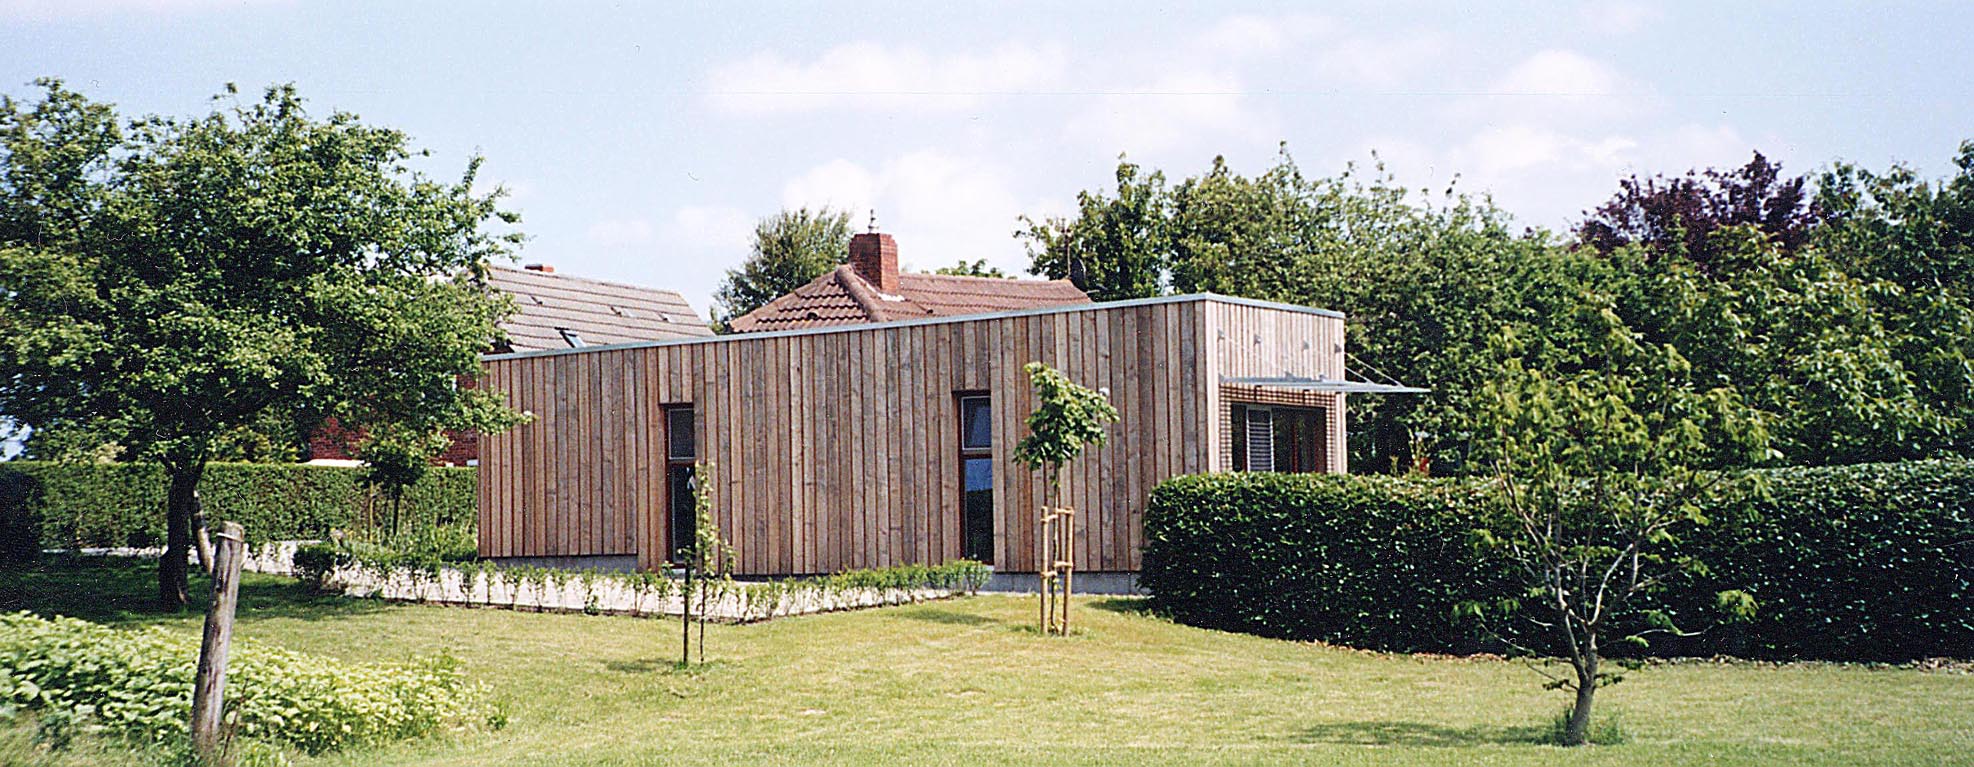 Haus B, Atelier 2002